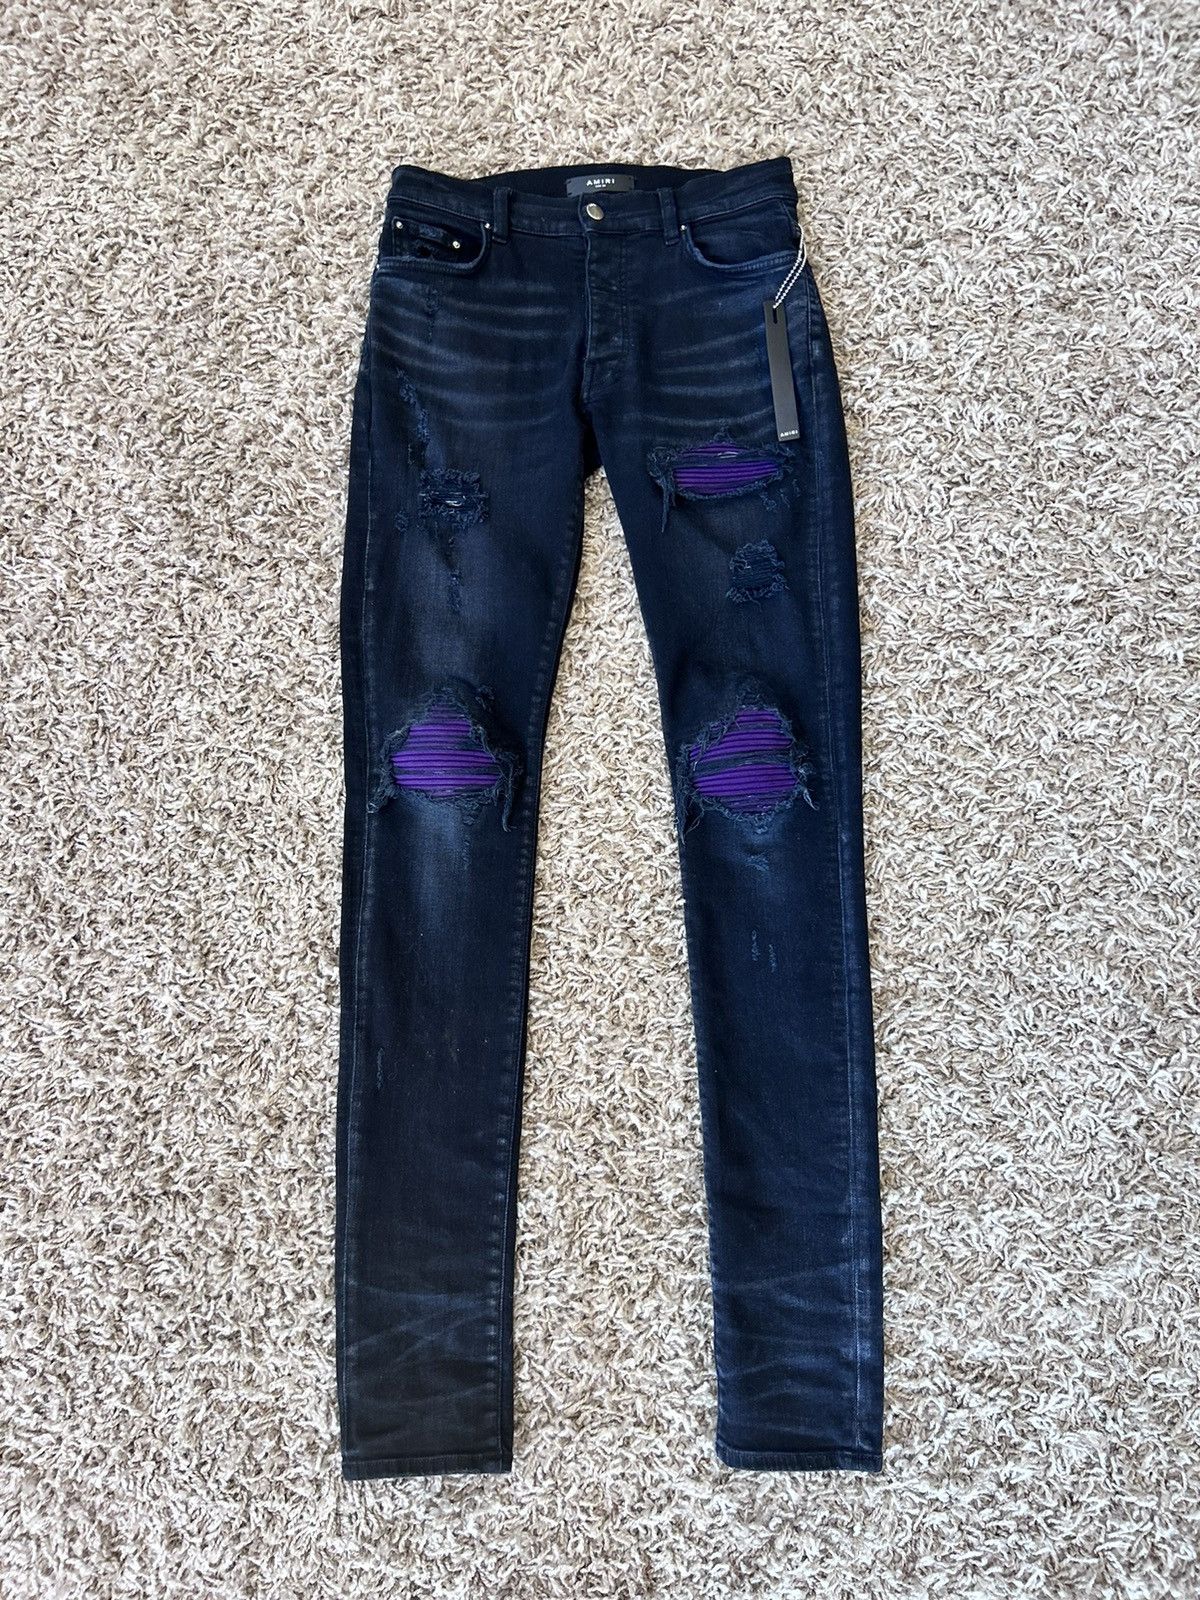 Pre-owned Amiri Jeans Black/purple Distressed Size 30